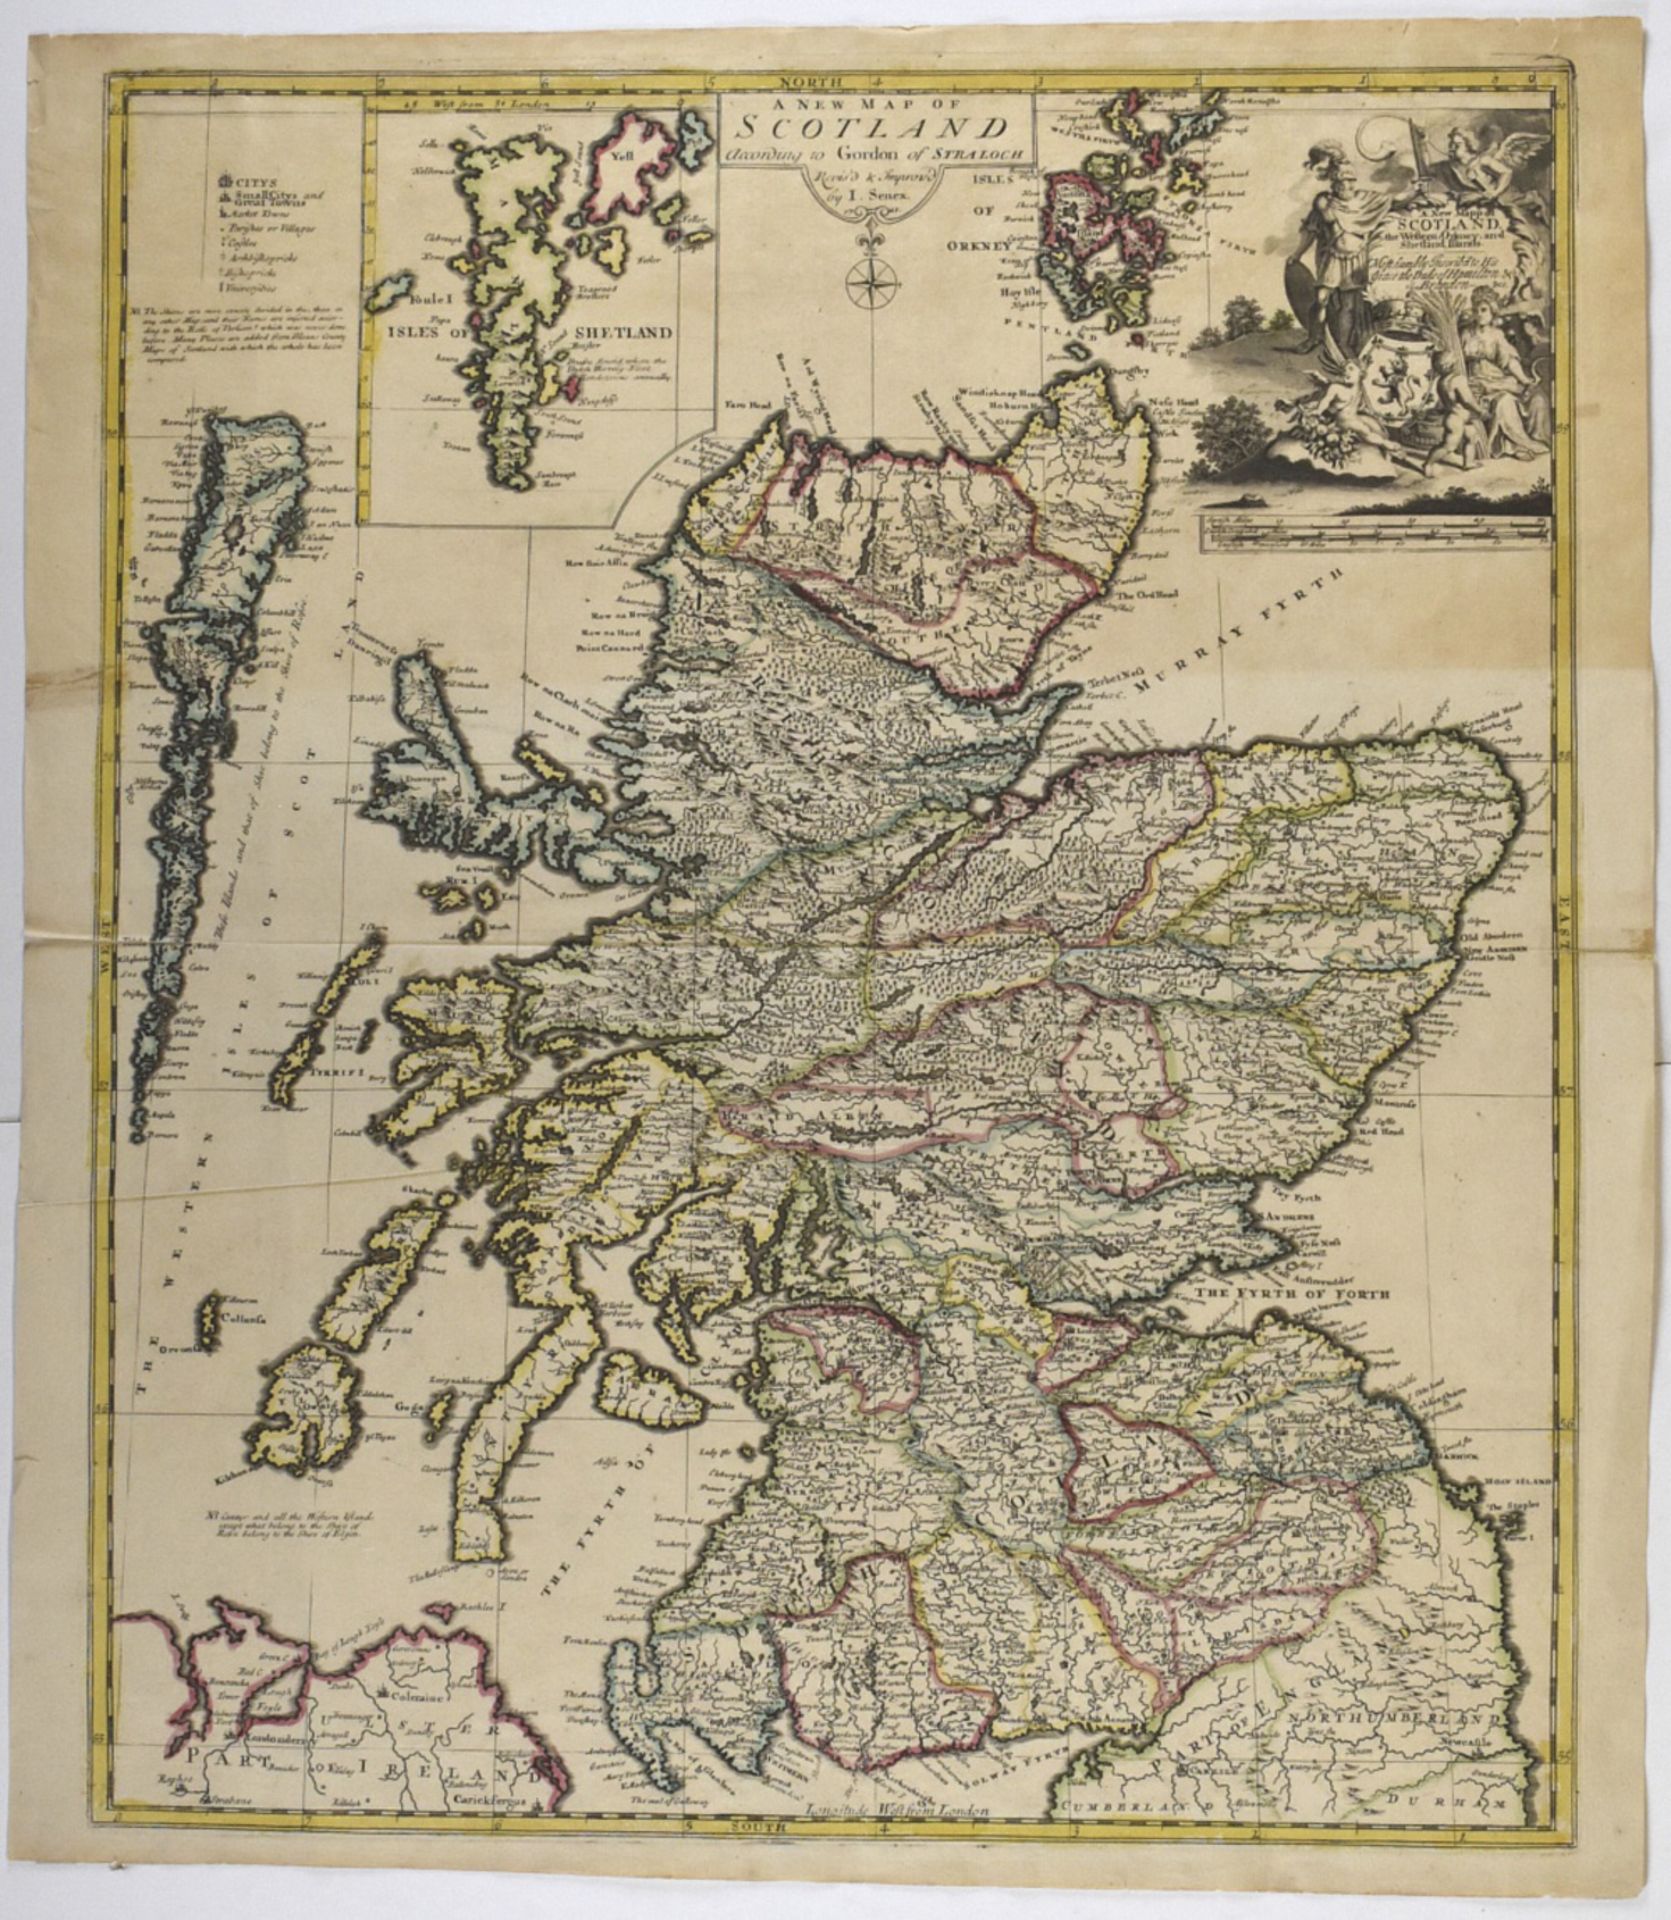 Grp: Maps of the British Isles